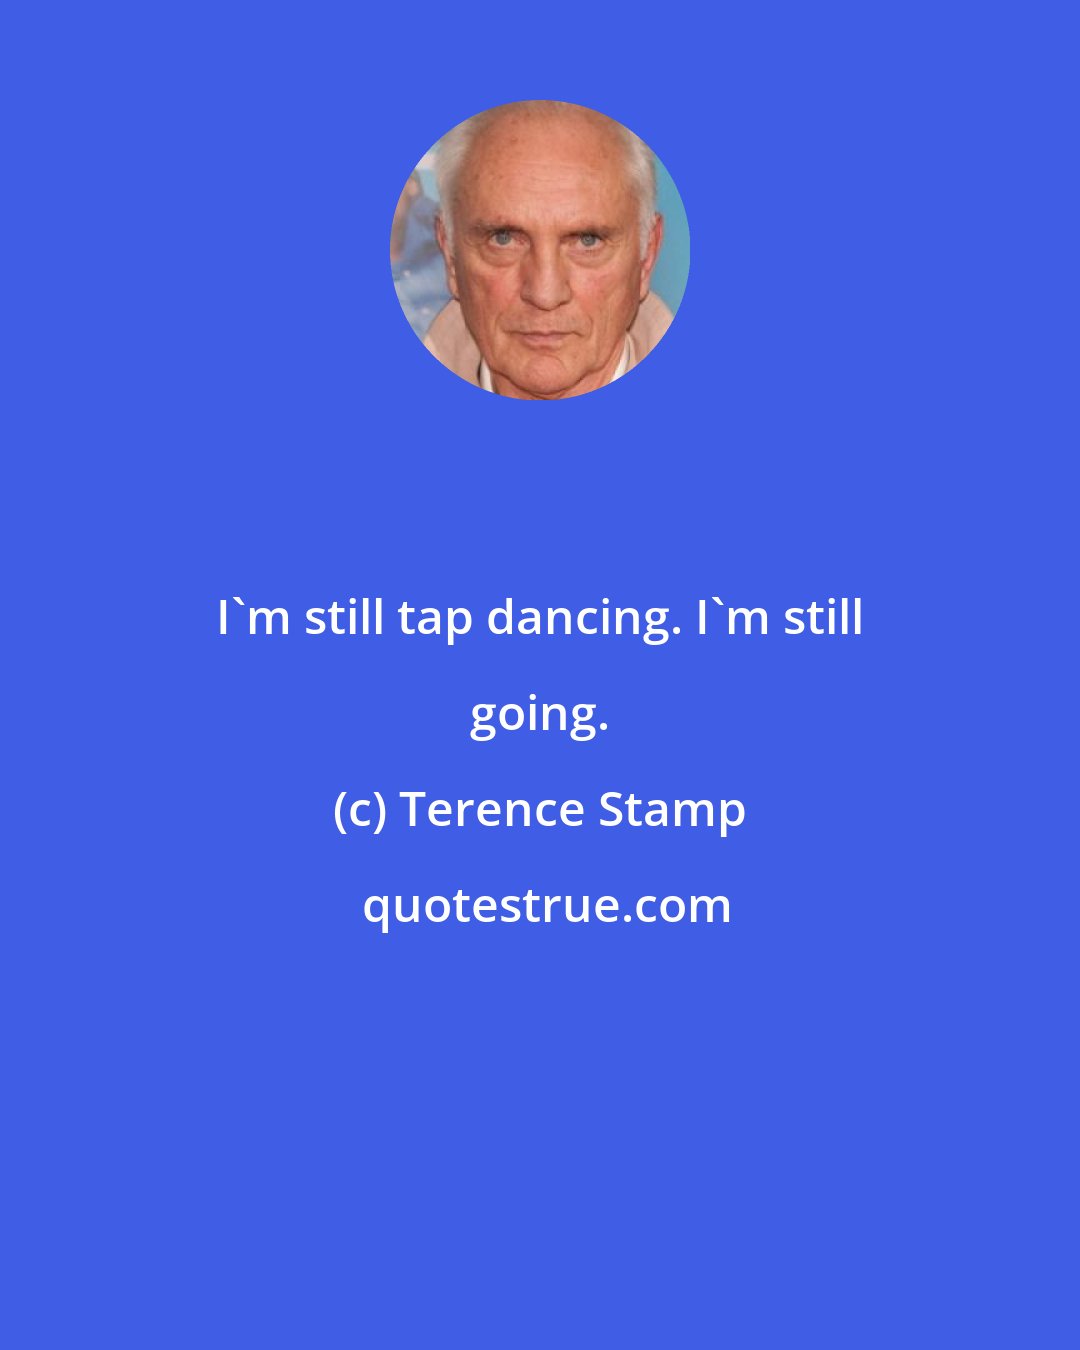 Terence Stamp: I'm still tap dancing. I'm still going.